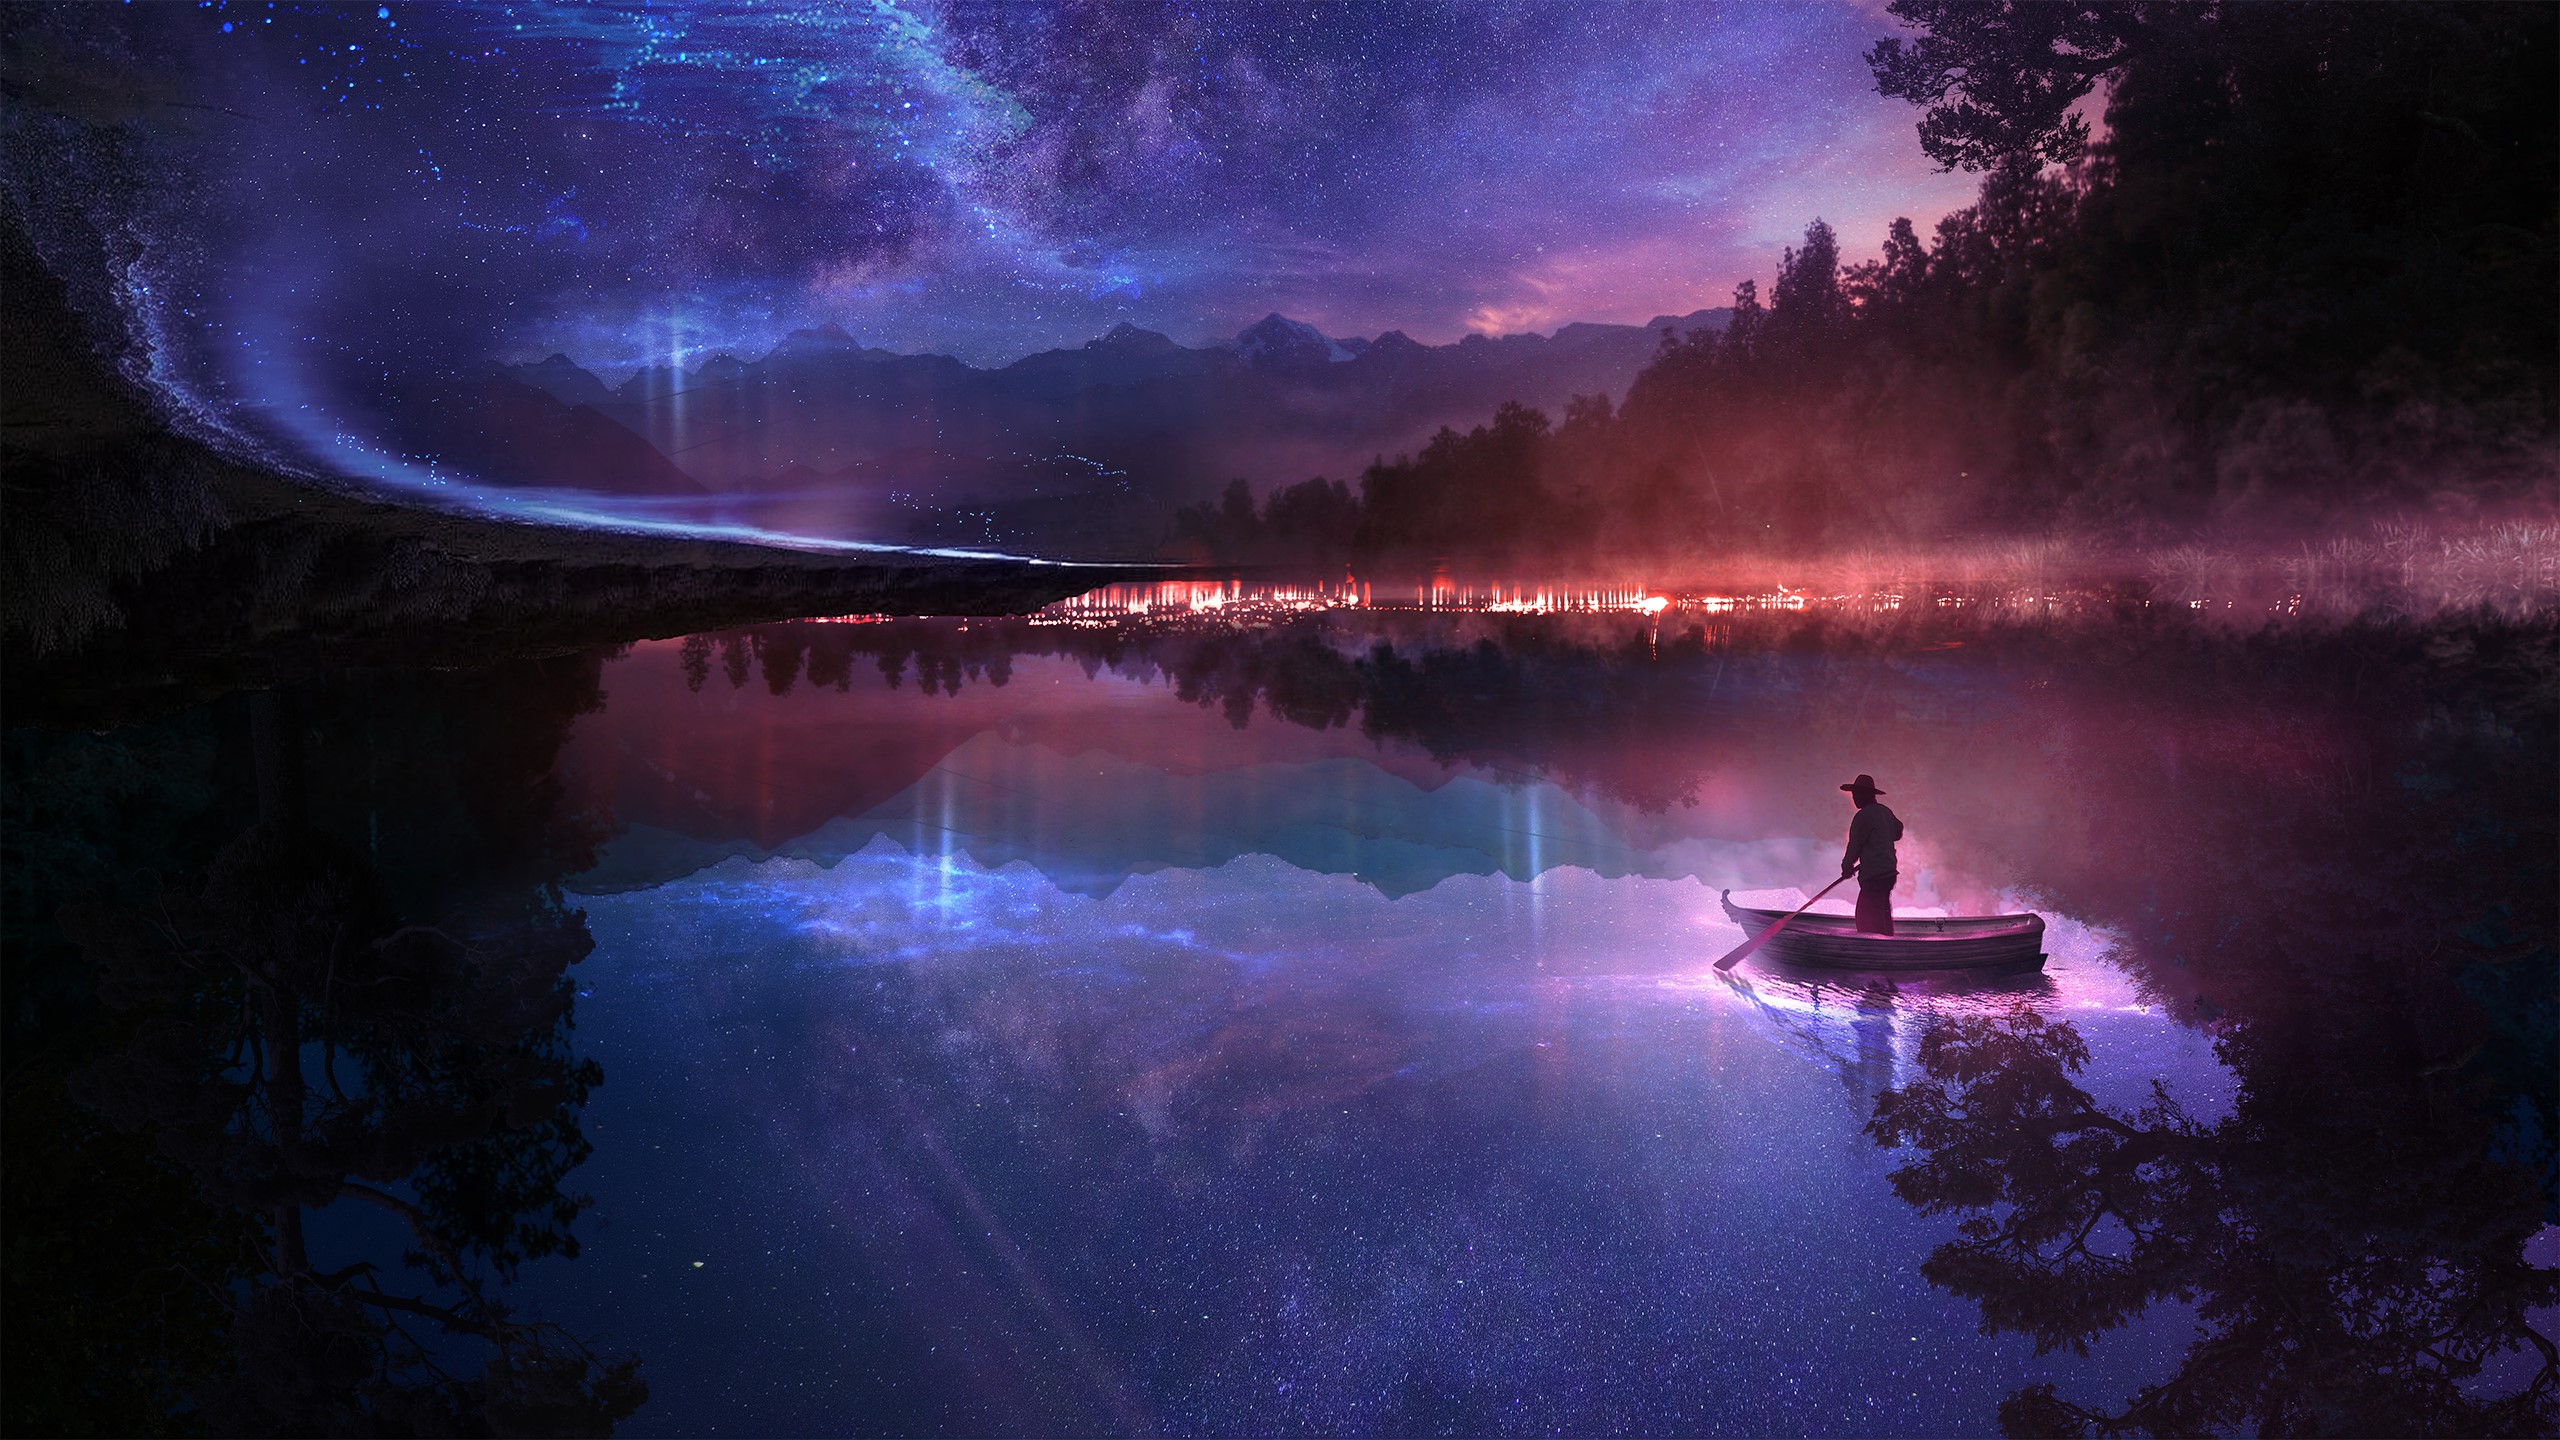 General 2560x1440 digital art boat mountains stars forest lake mist galaxy Martina Stipan t1na